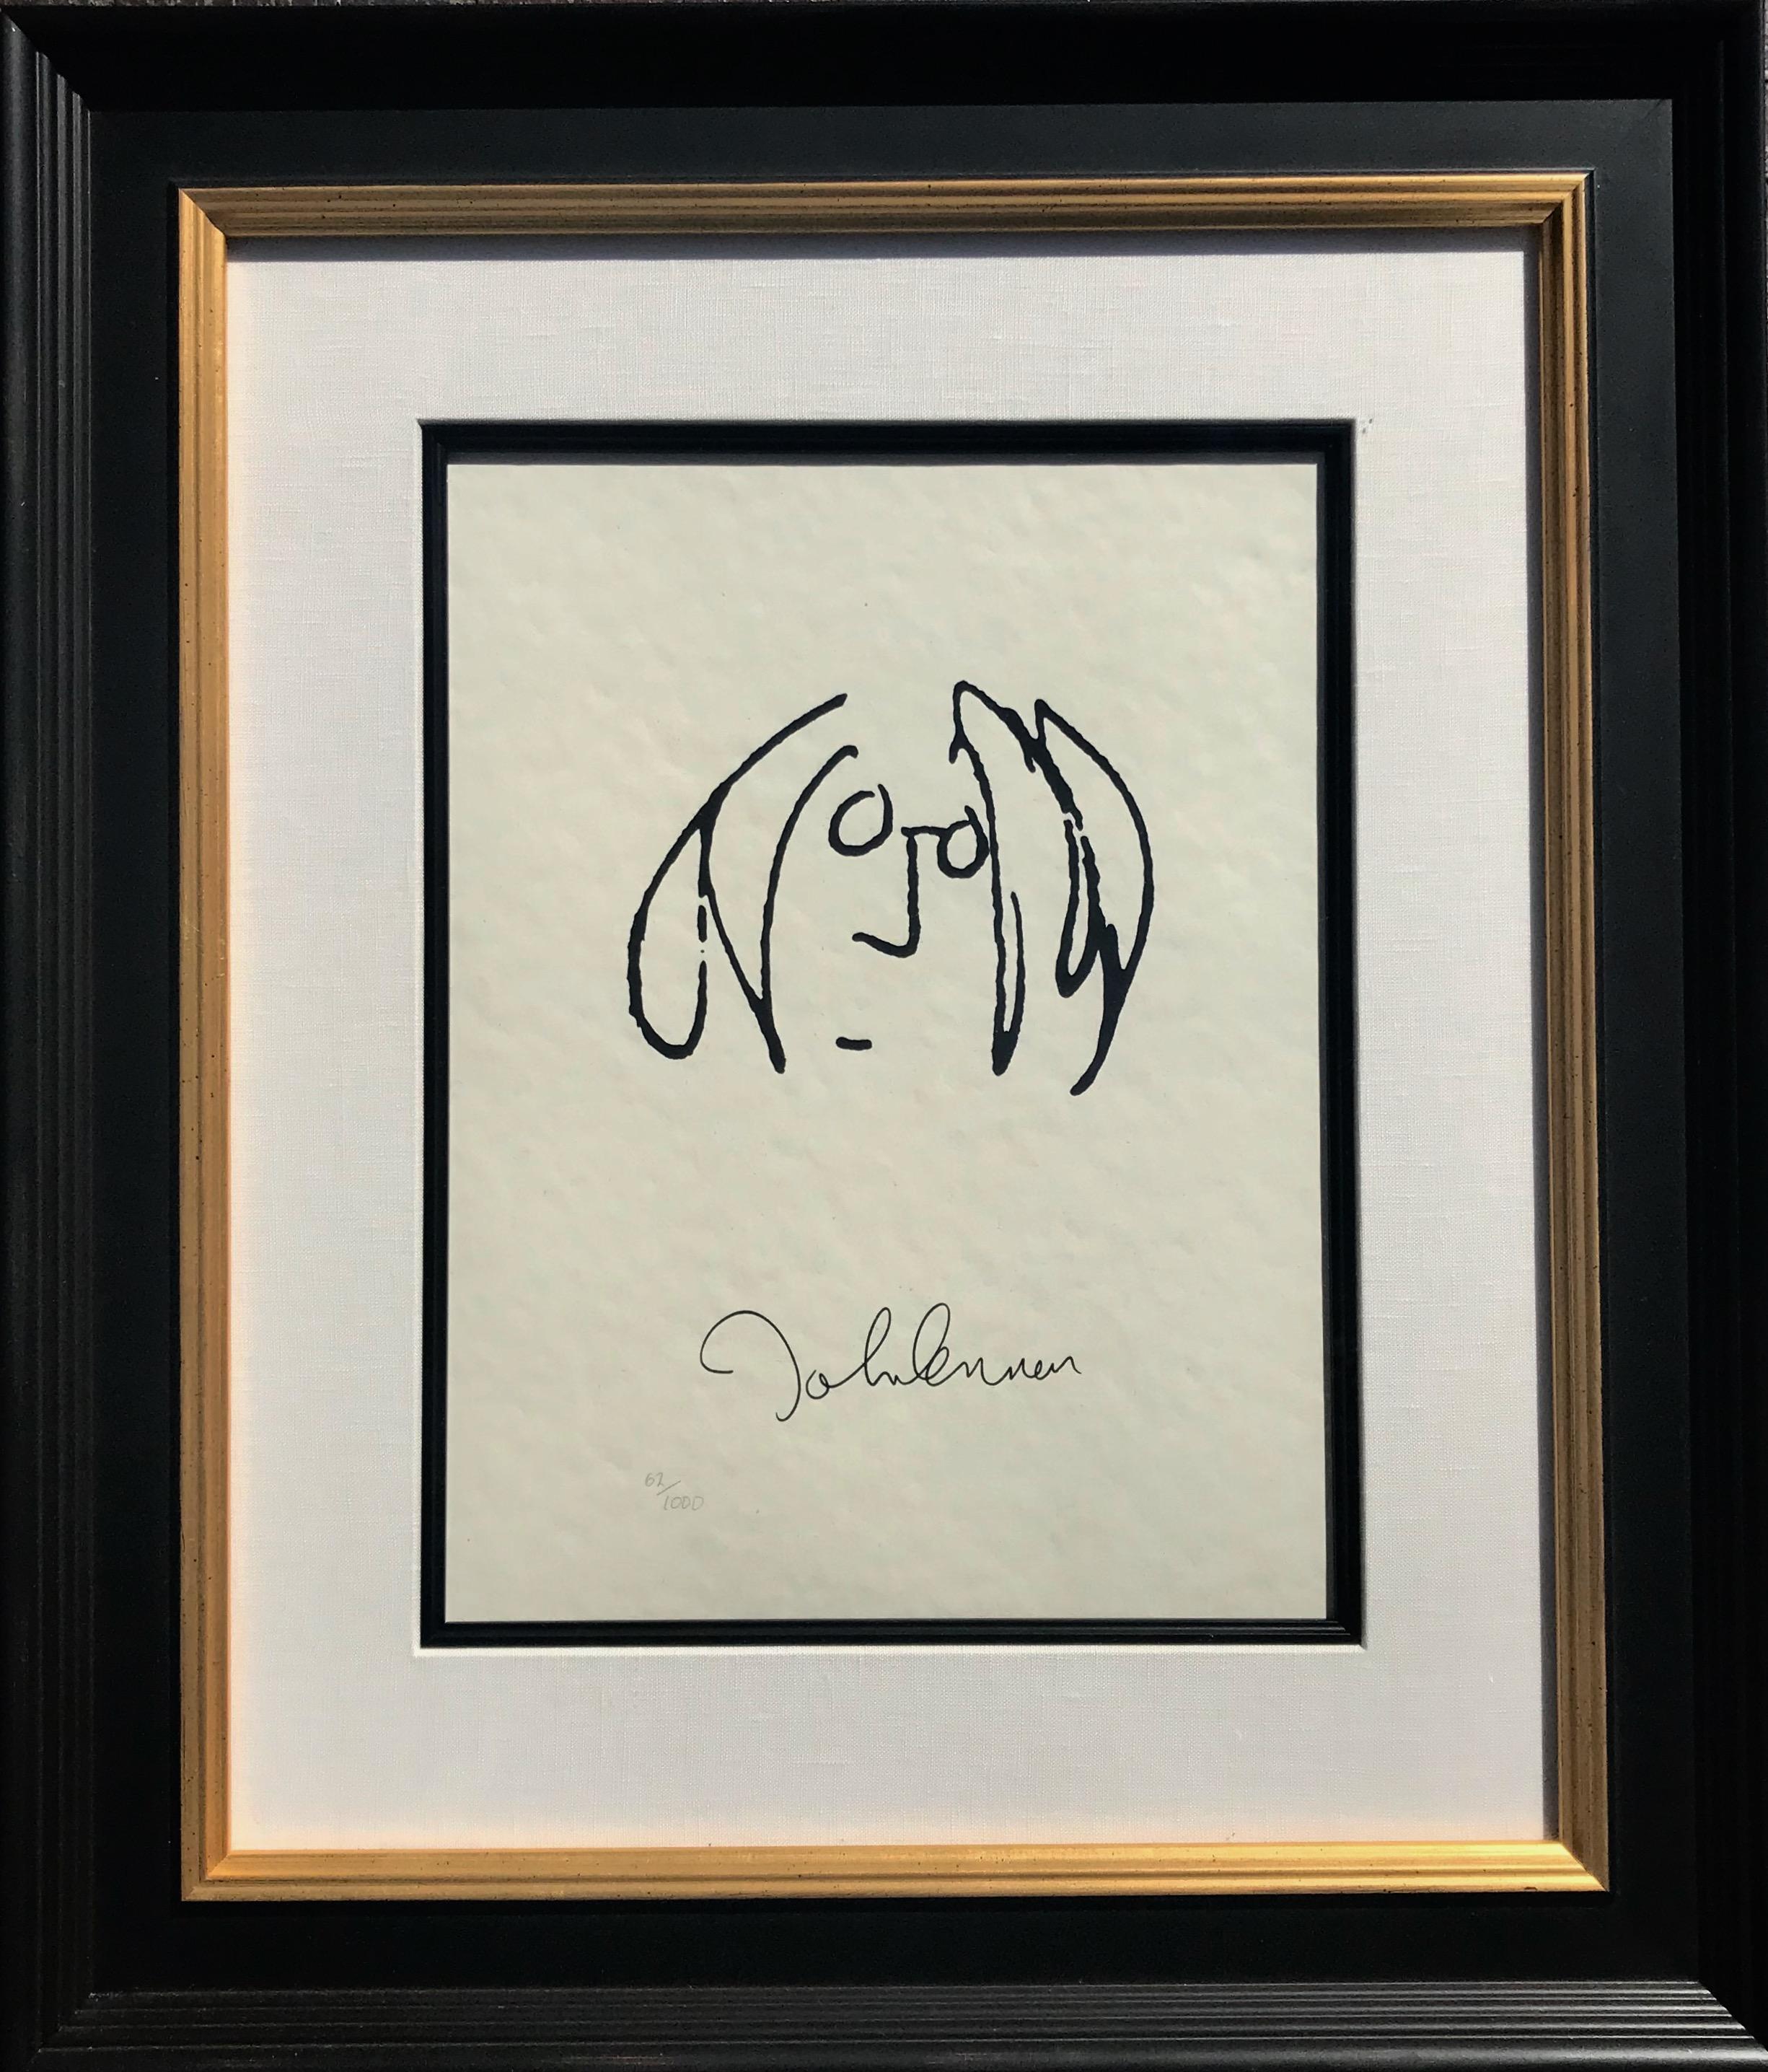 John Lennon Print - "Self Portrait" Limited Edition Drawing